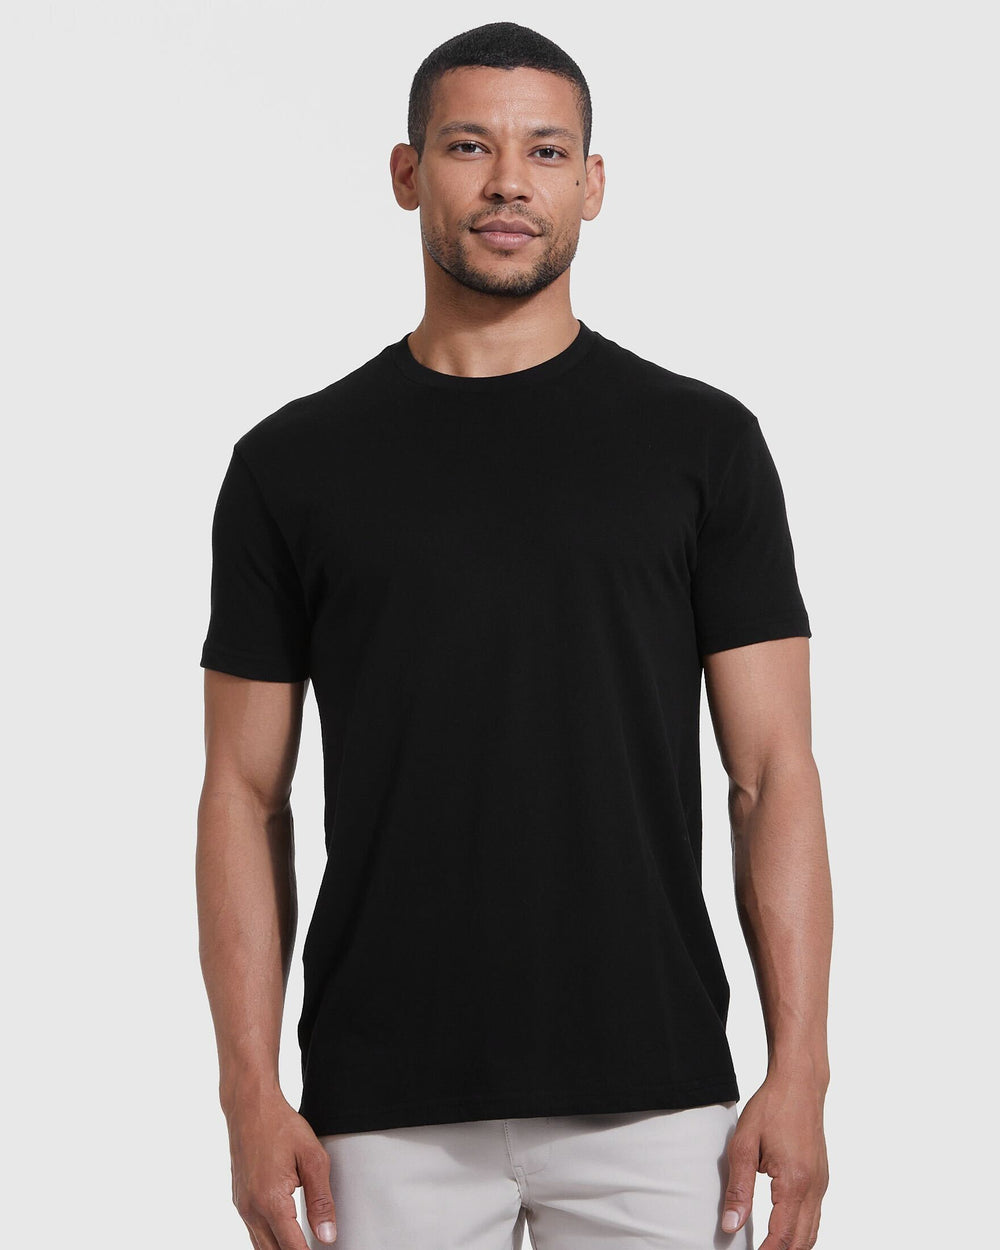 Men's Black Crew Neck T-Shirt - True Classic